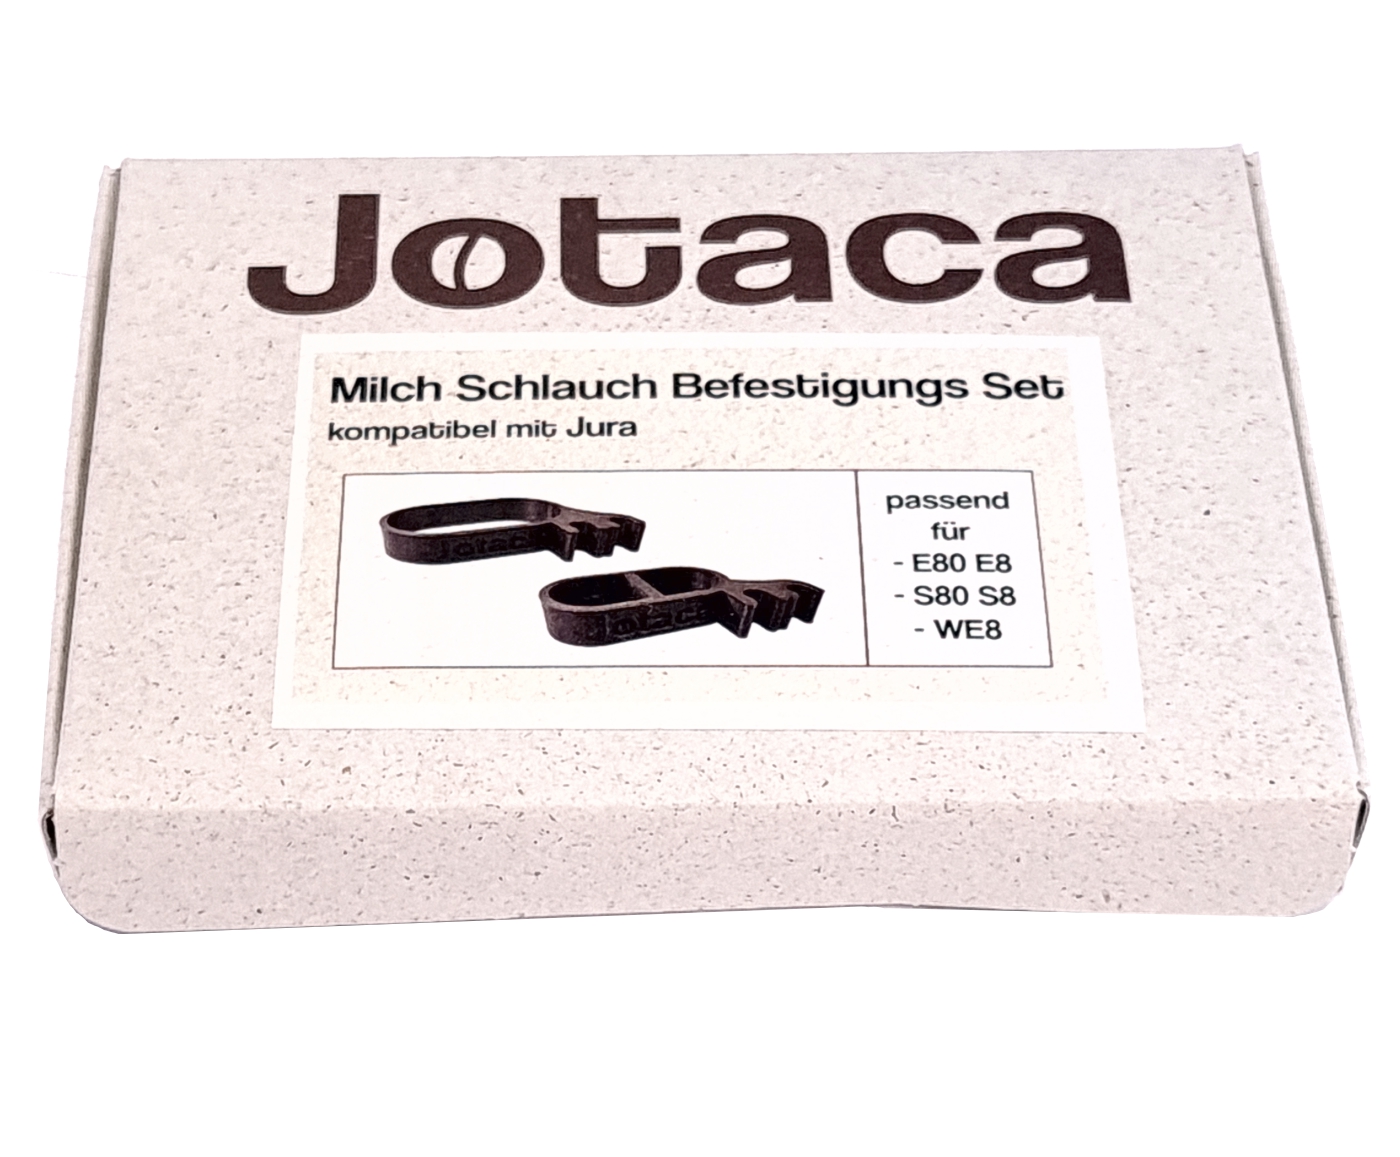 Milchschlauch Befestigung Set kompatibel mit Jura E80 E8 S80 S8 WE8